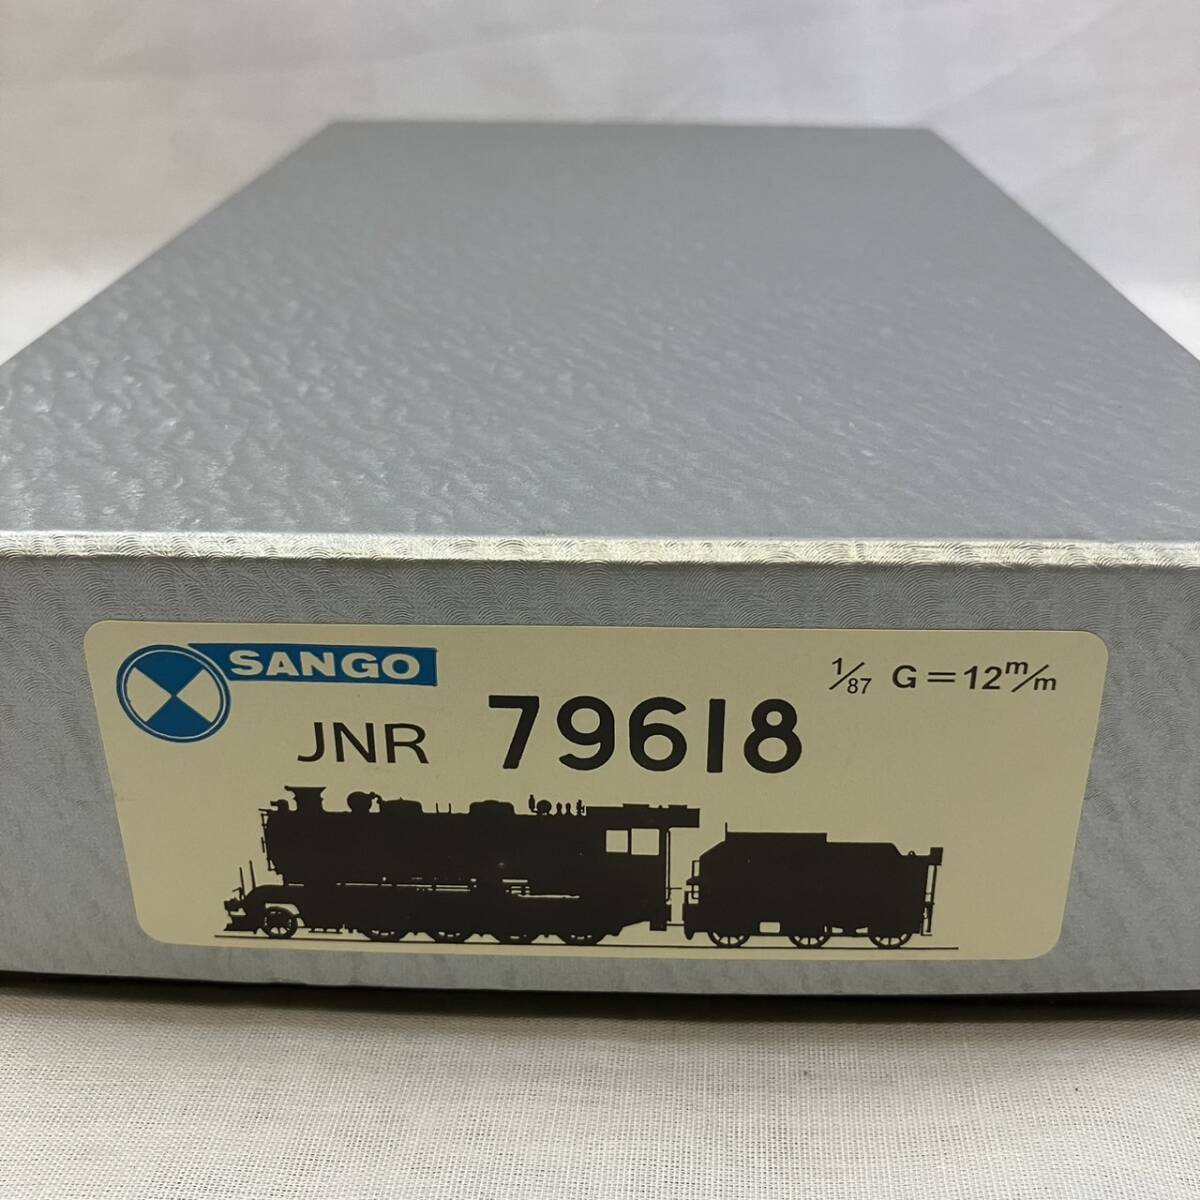 [5-173]♪SANGO JNR 79618 ベースキット 1/87 G=12m/m 鉄道模型 _画像8